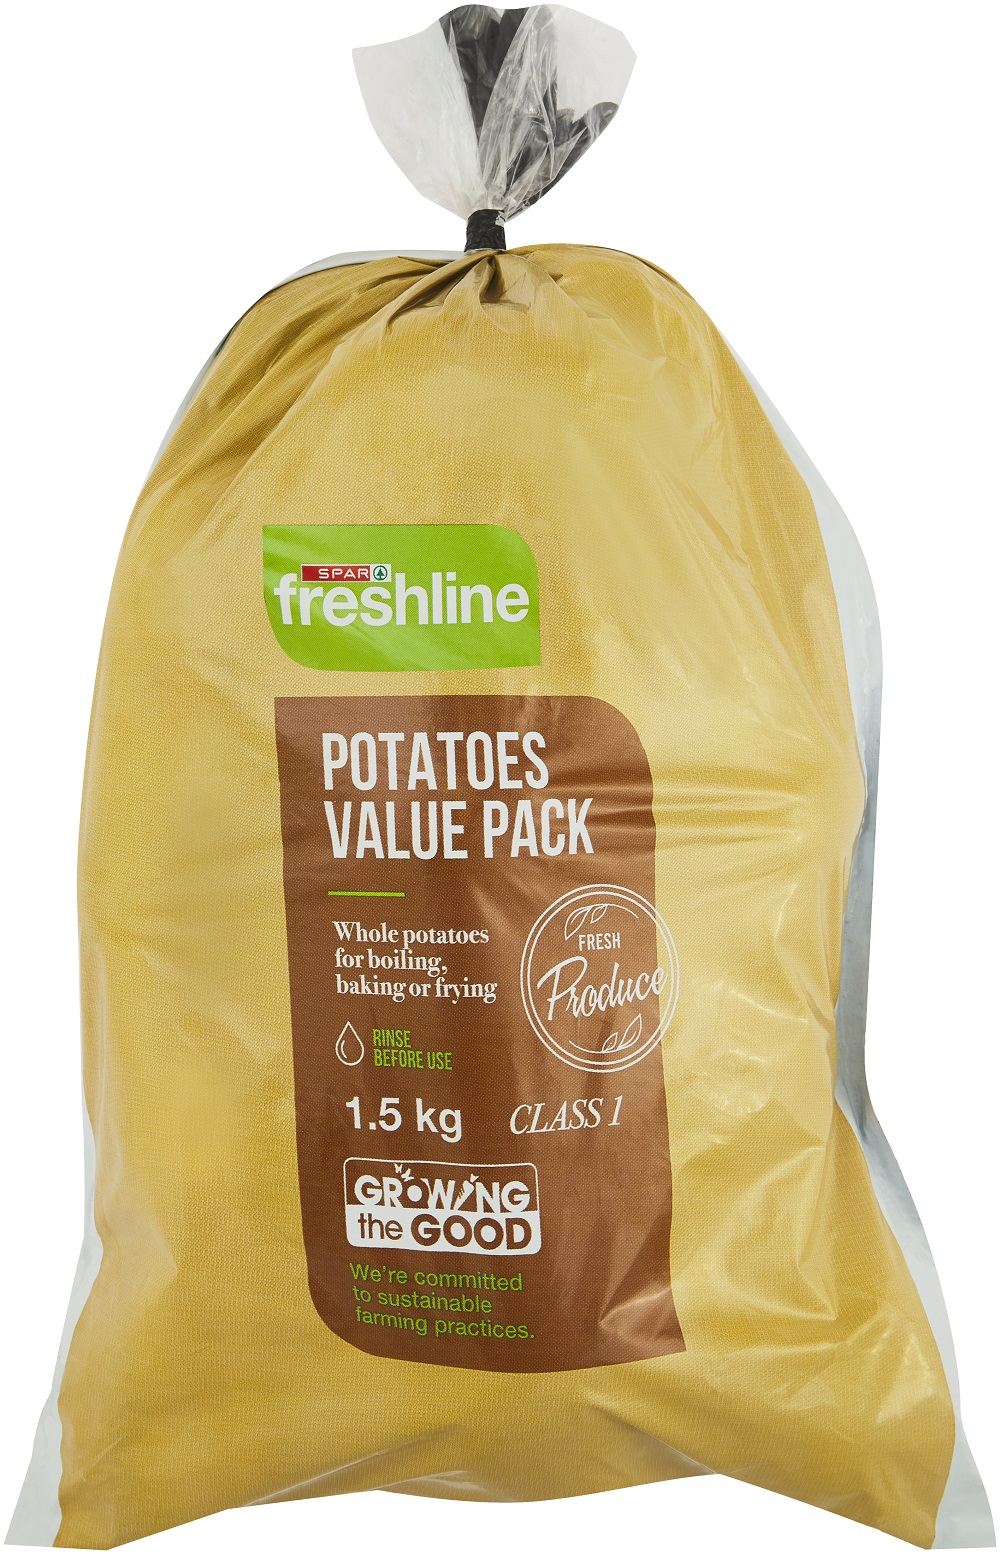 freshline potatoes 